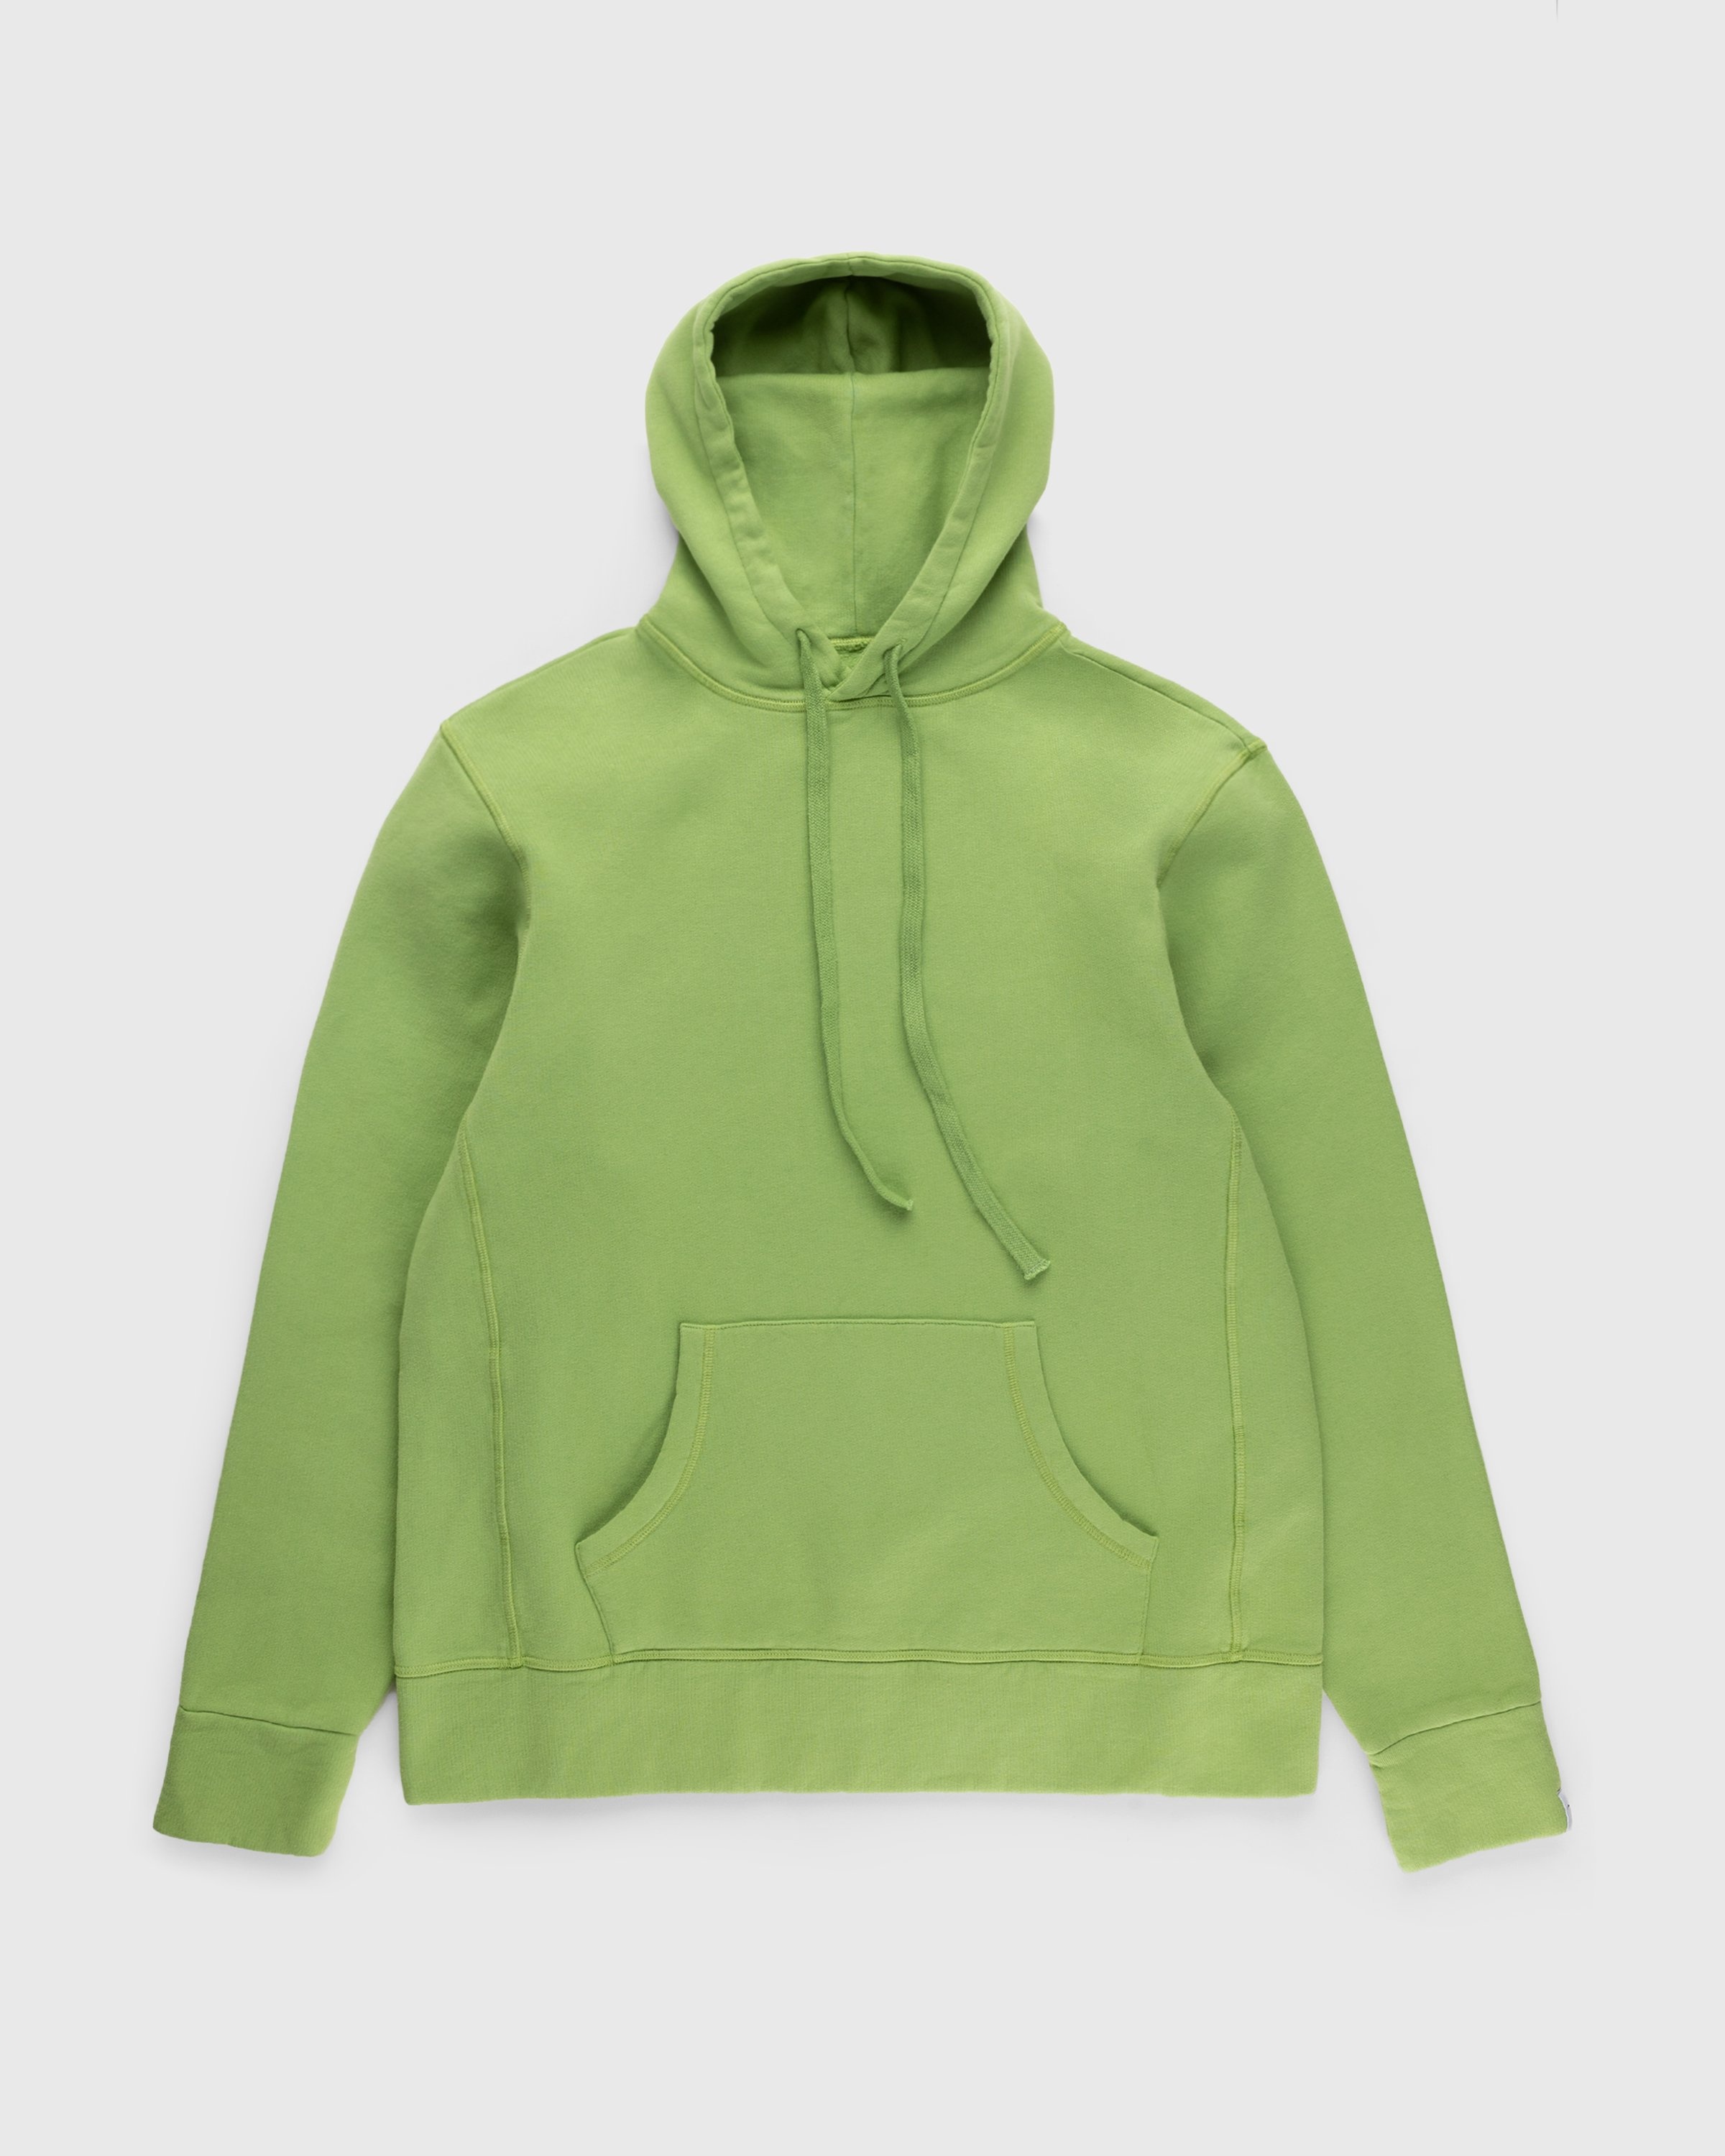 Winnie New York – Cotton Fleece Hoodie Green - Sweats - Green - Image 1